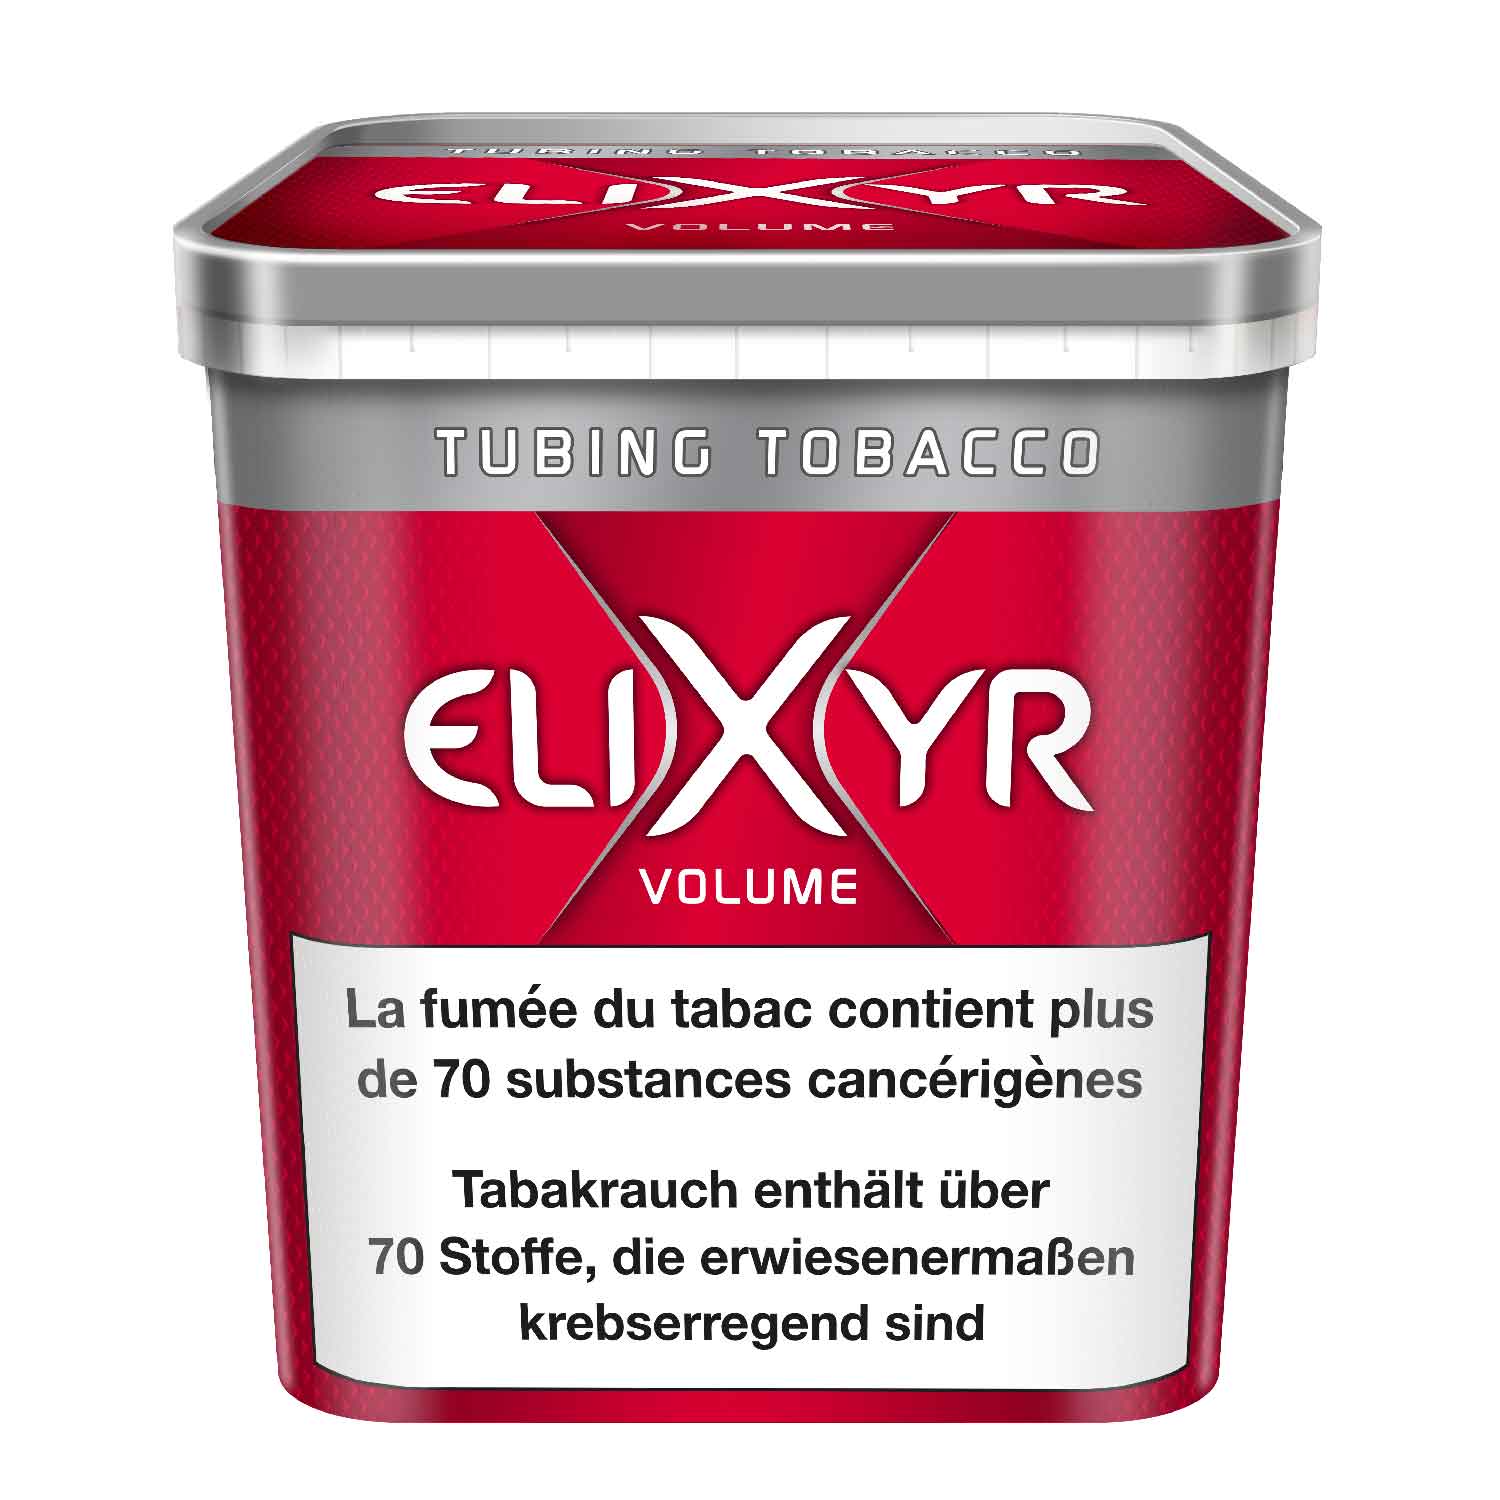 Elixyr Make Your Own Max Volume Tobacco, Buy Online